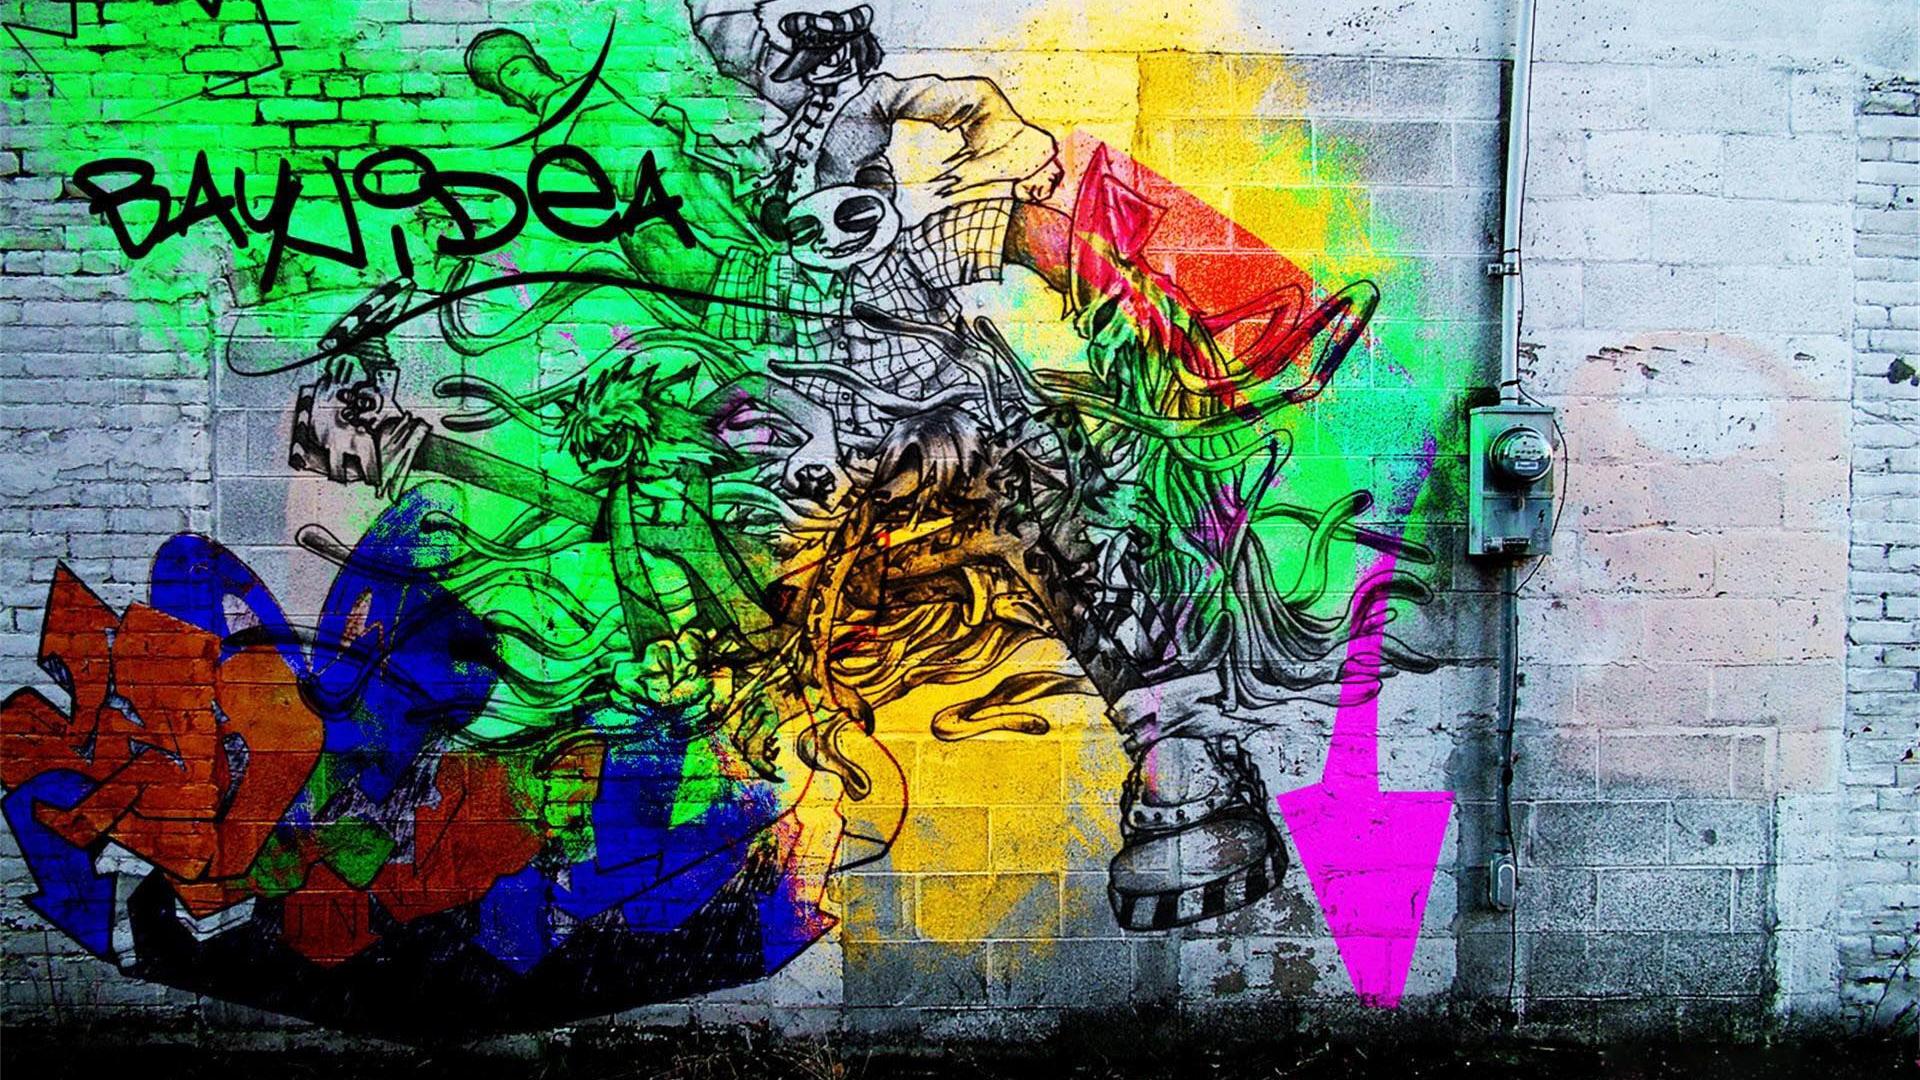 Wallpaper Graffiti 75 pictures